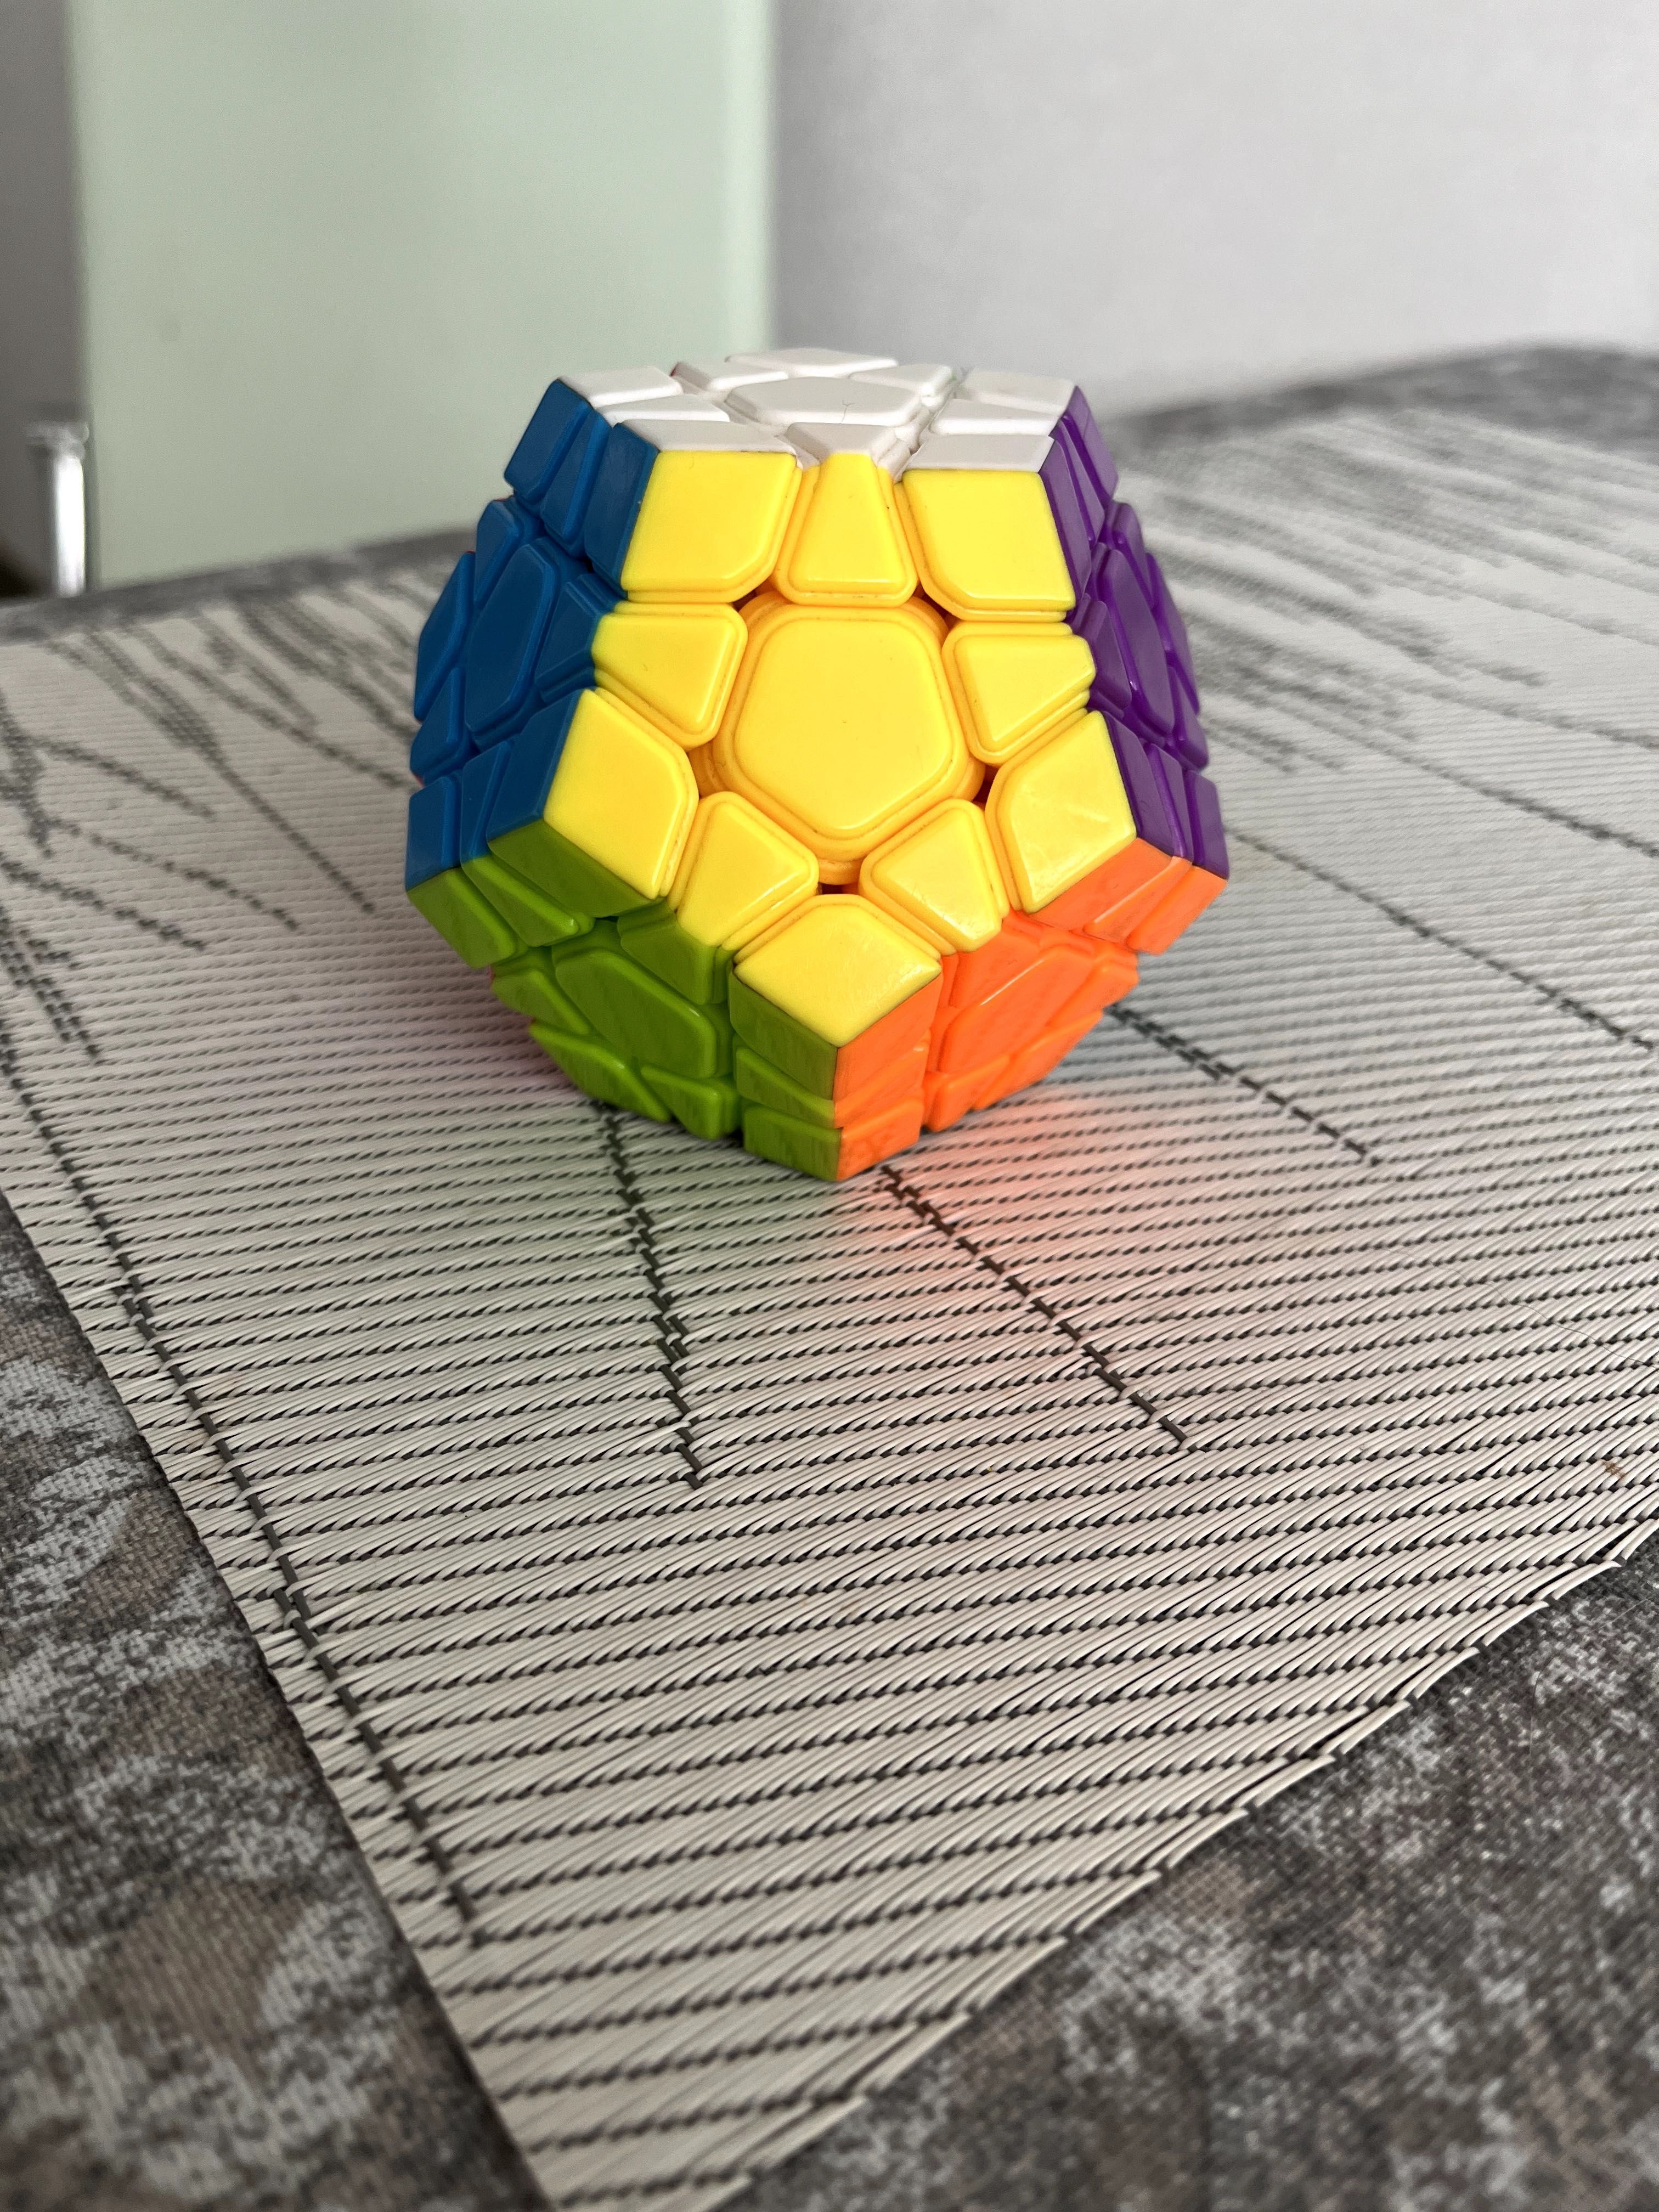 Кубик кубика/Мегамінкс Meilong без стікерів (stickerless)